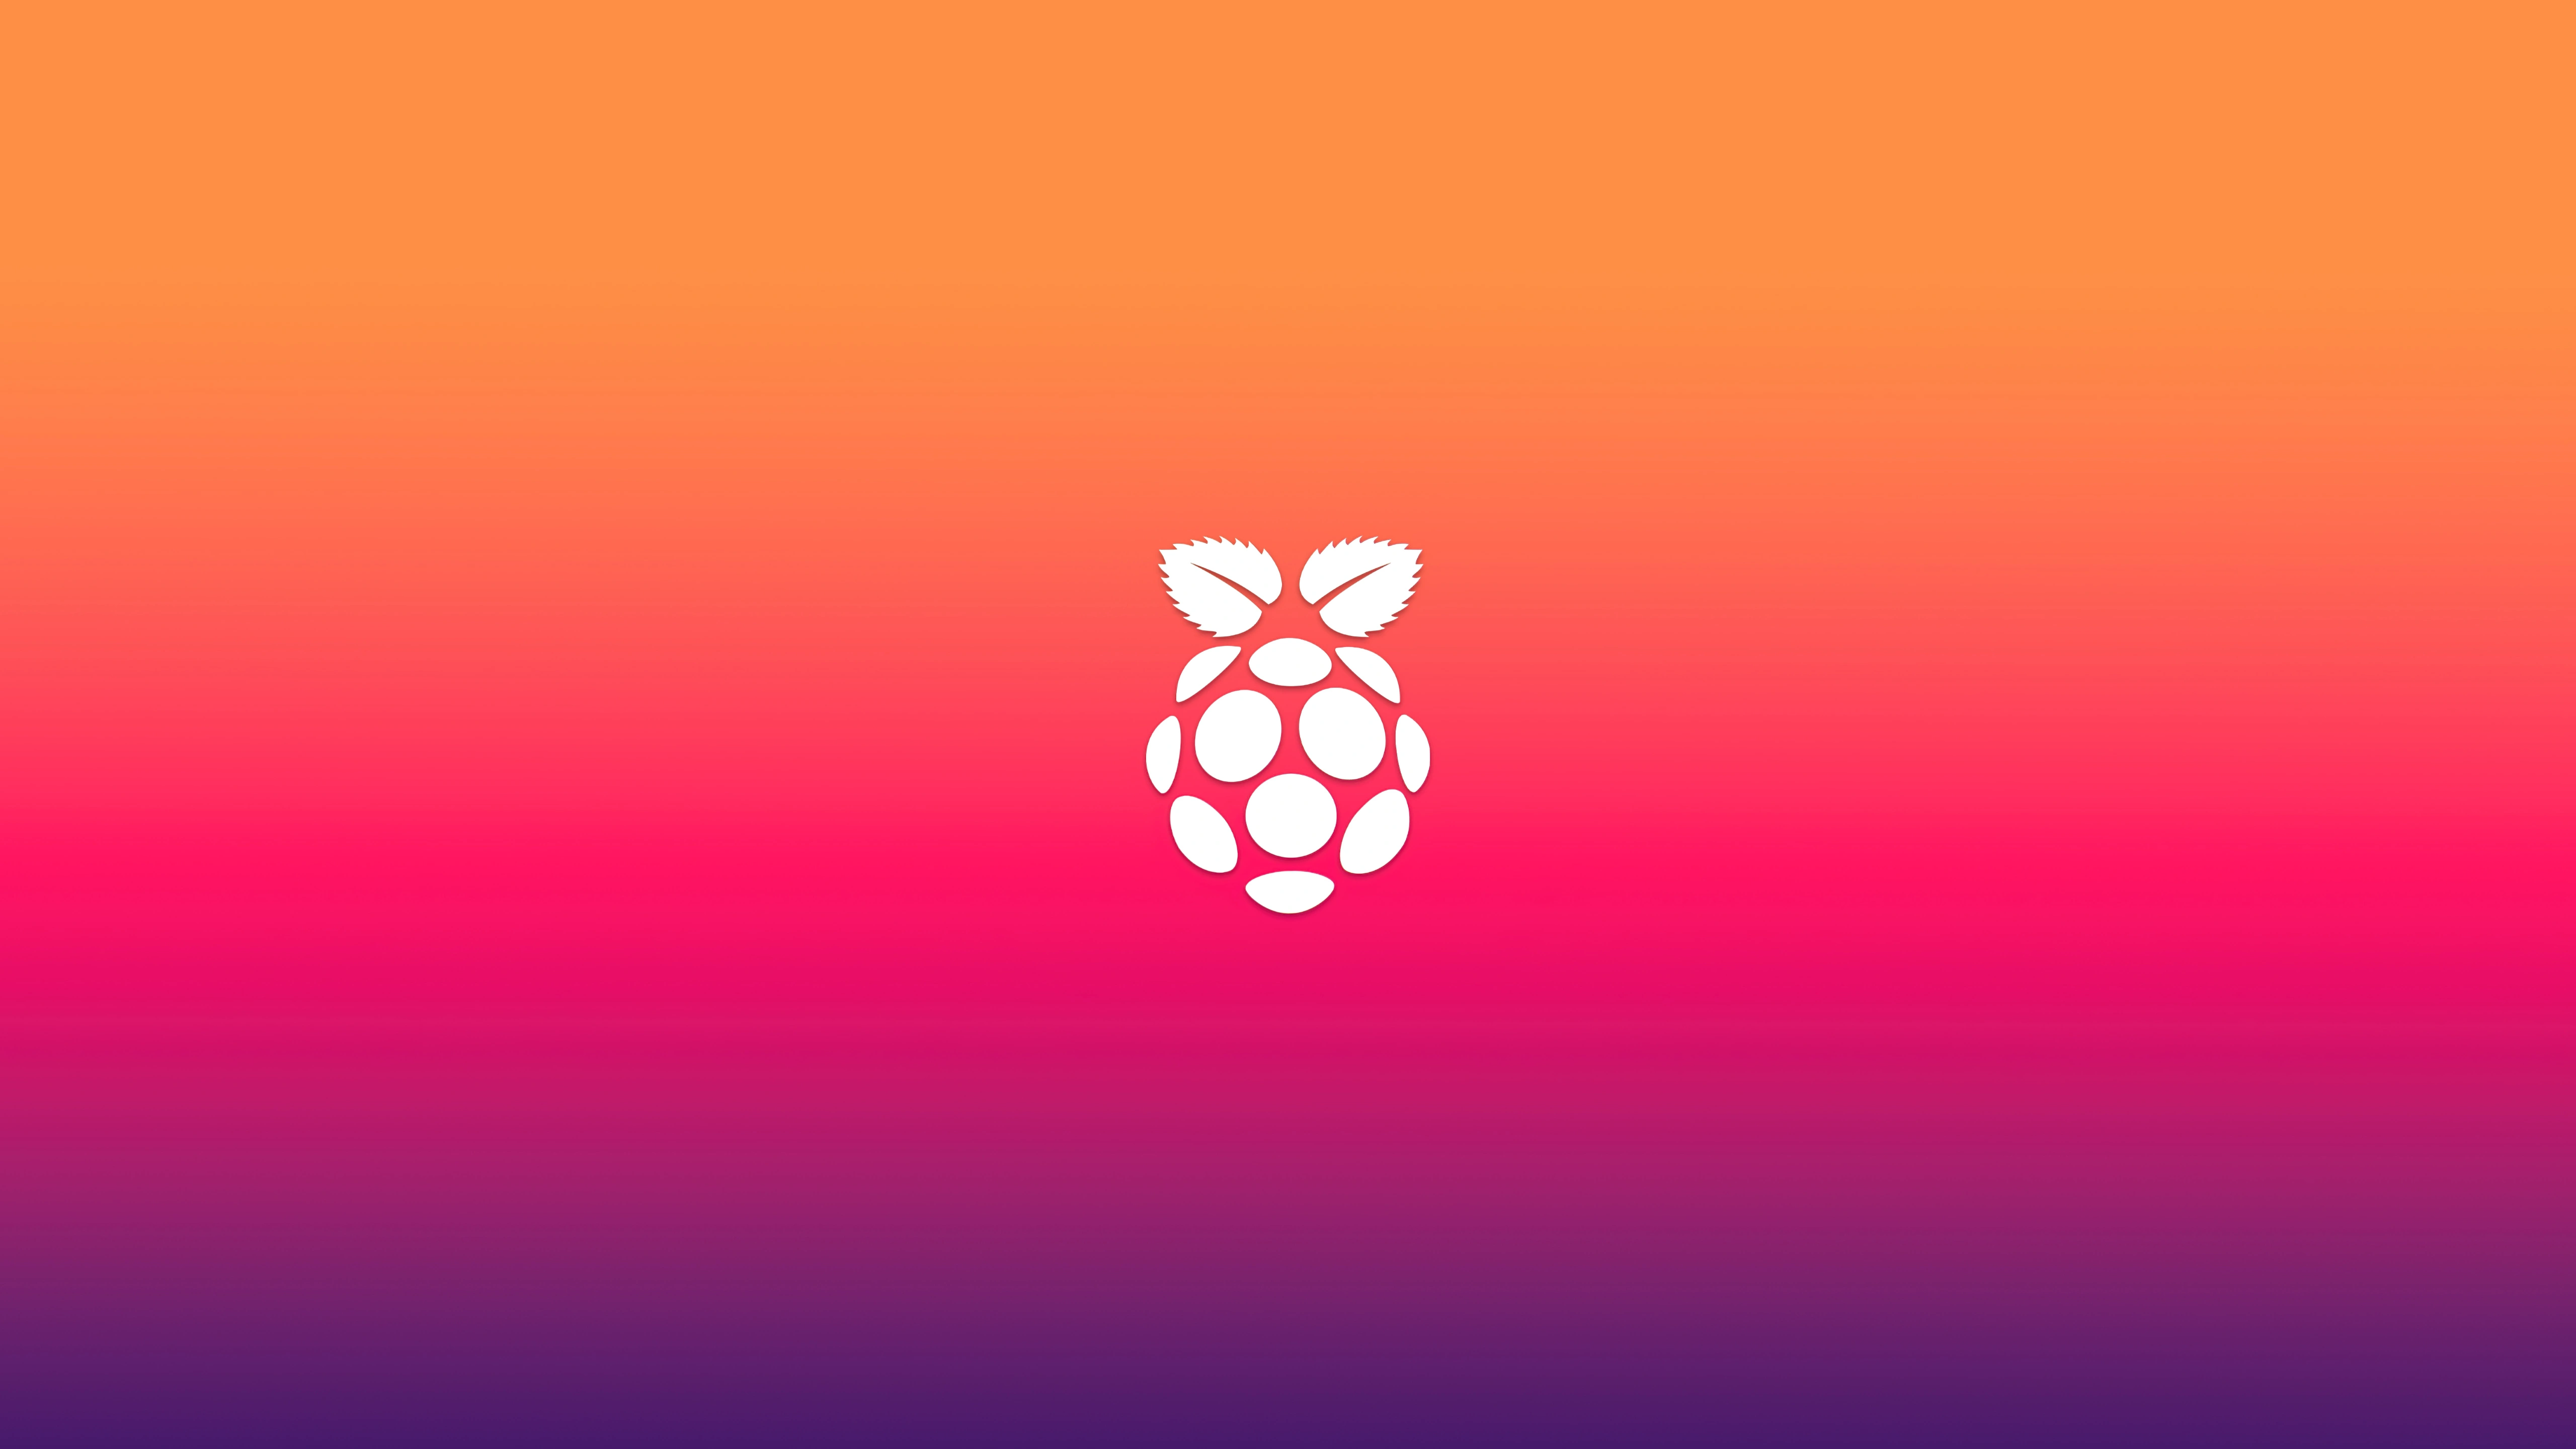 raspberry pi logo minimal 5k 3h.jpg